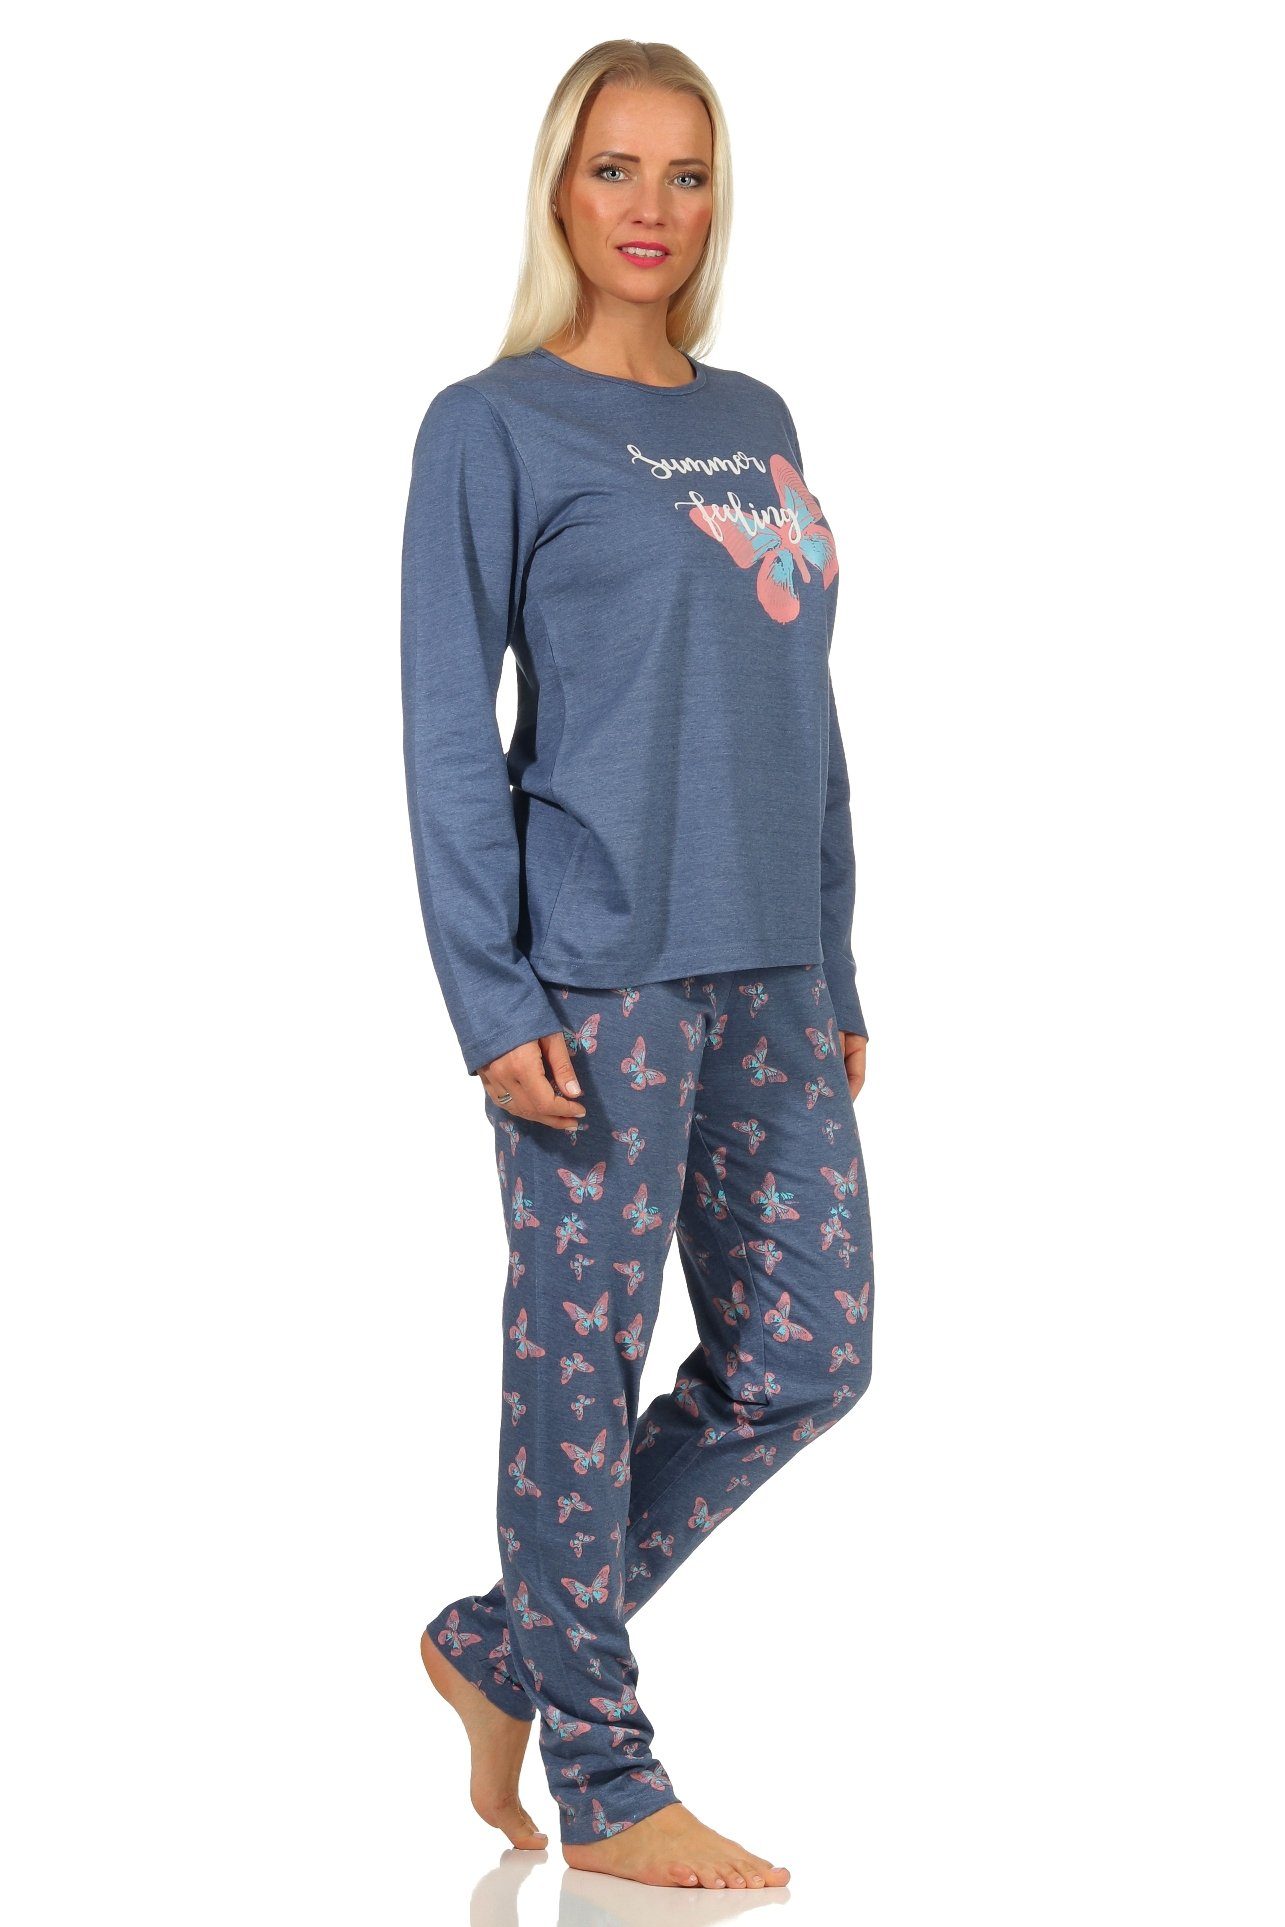 Schmetterlingsmotiv Normann by mit Damen - 10 811 blau 122 Schlafanzug langarm Pyjama RELAX